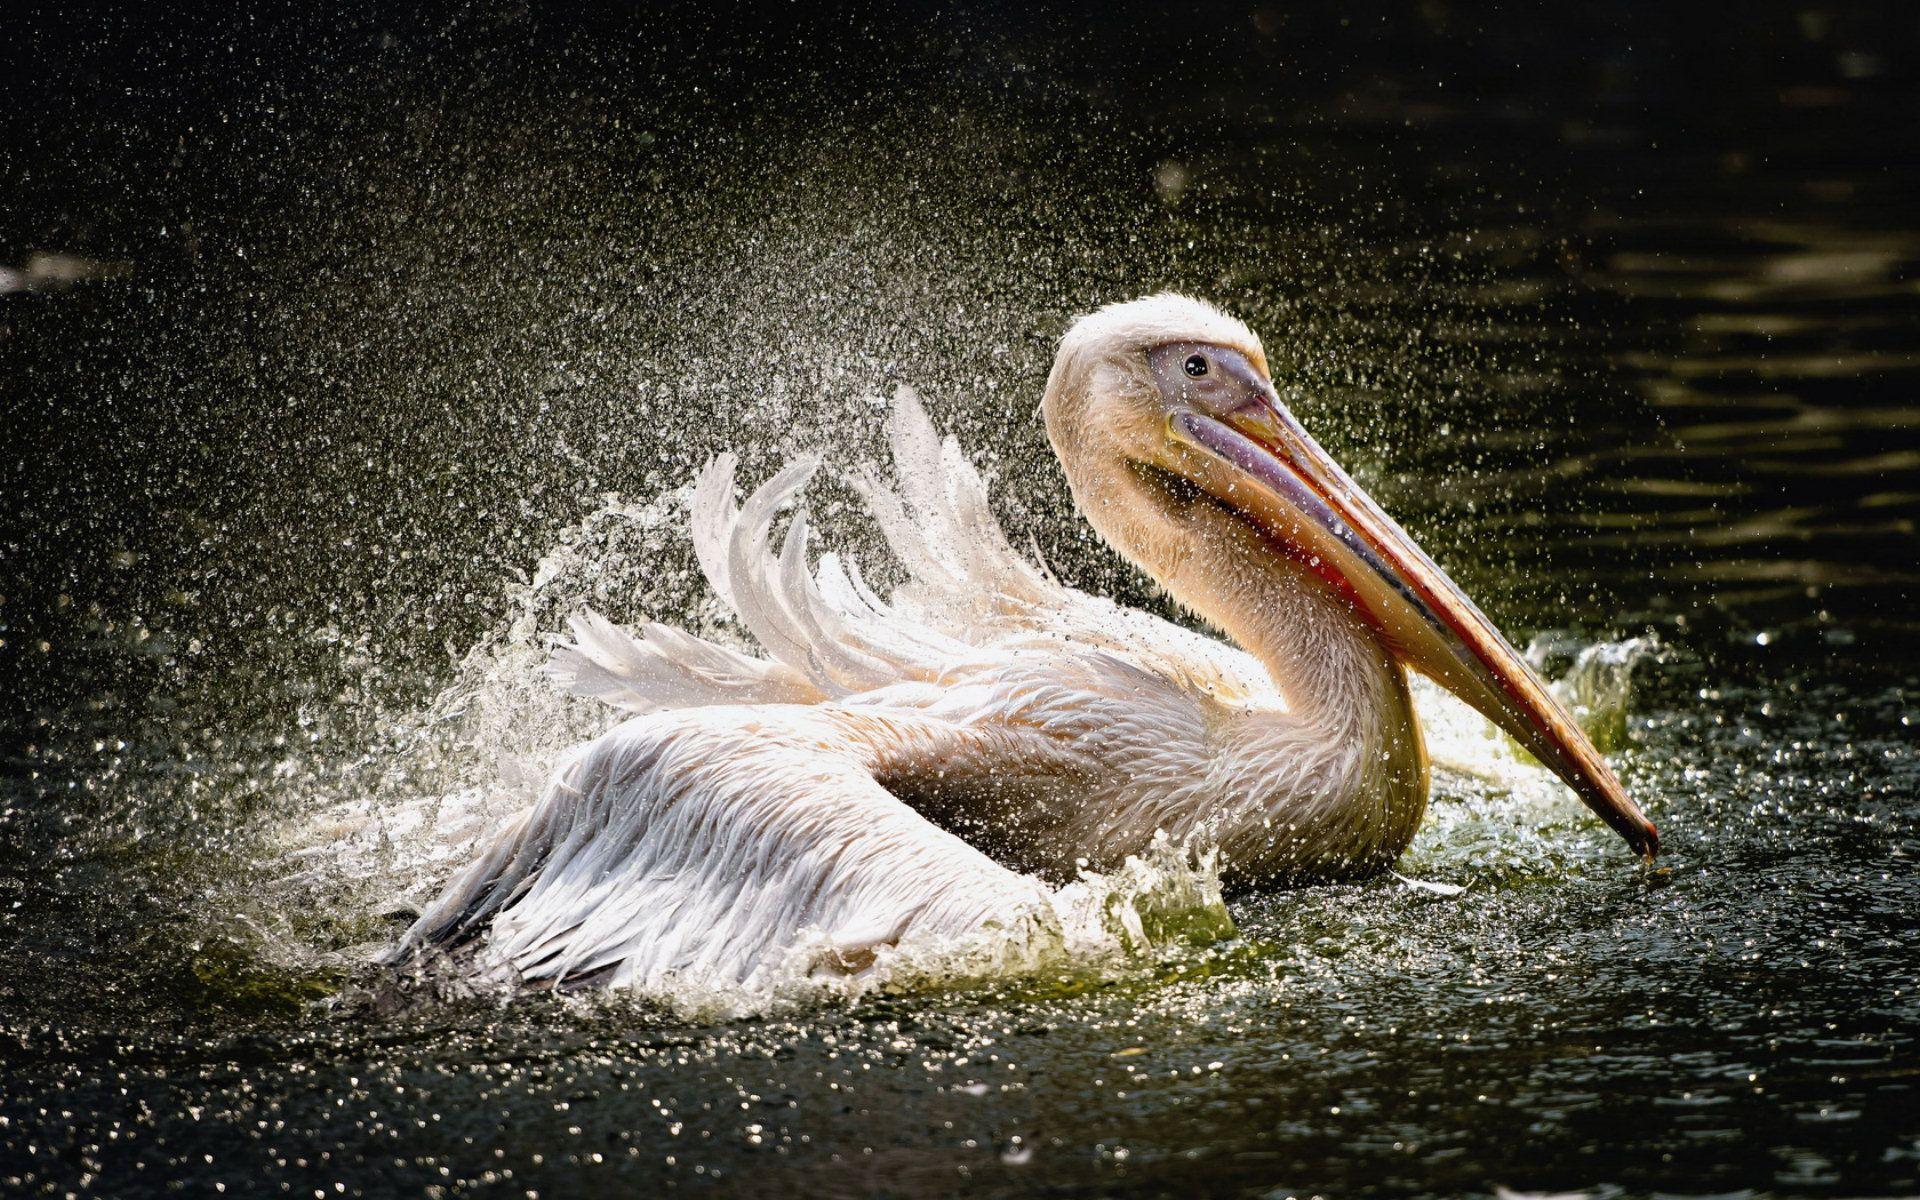 Wallpaper background bird Pelican images for desktop section животные   download